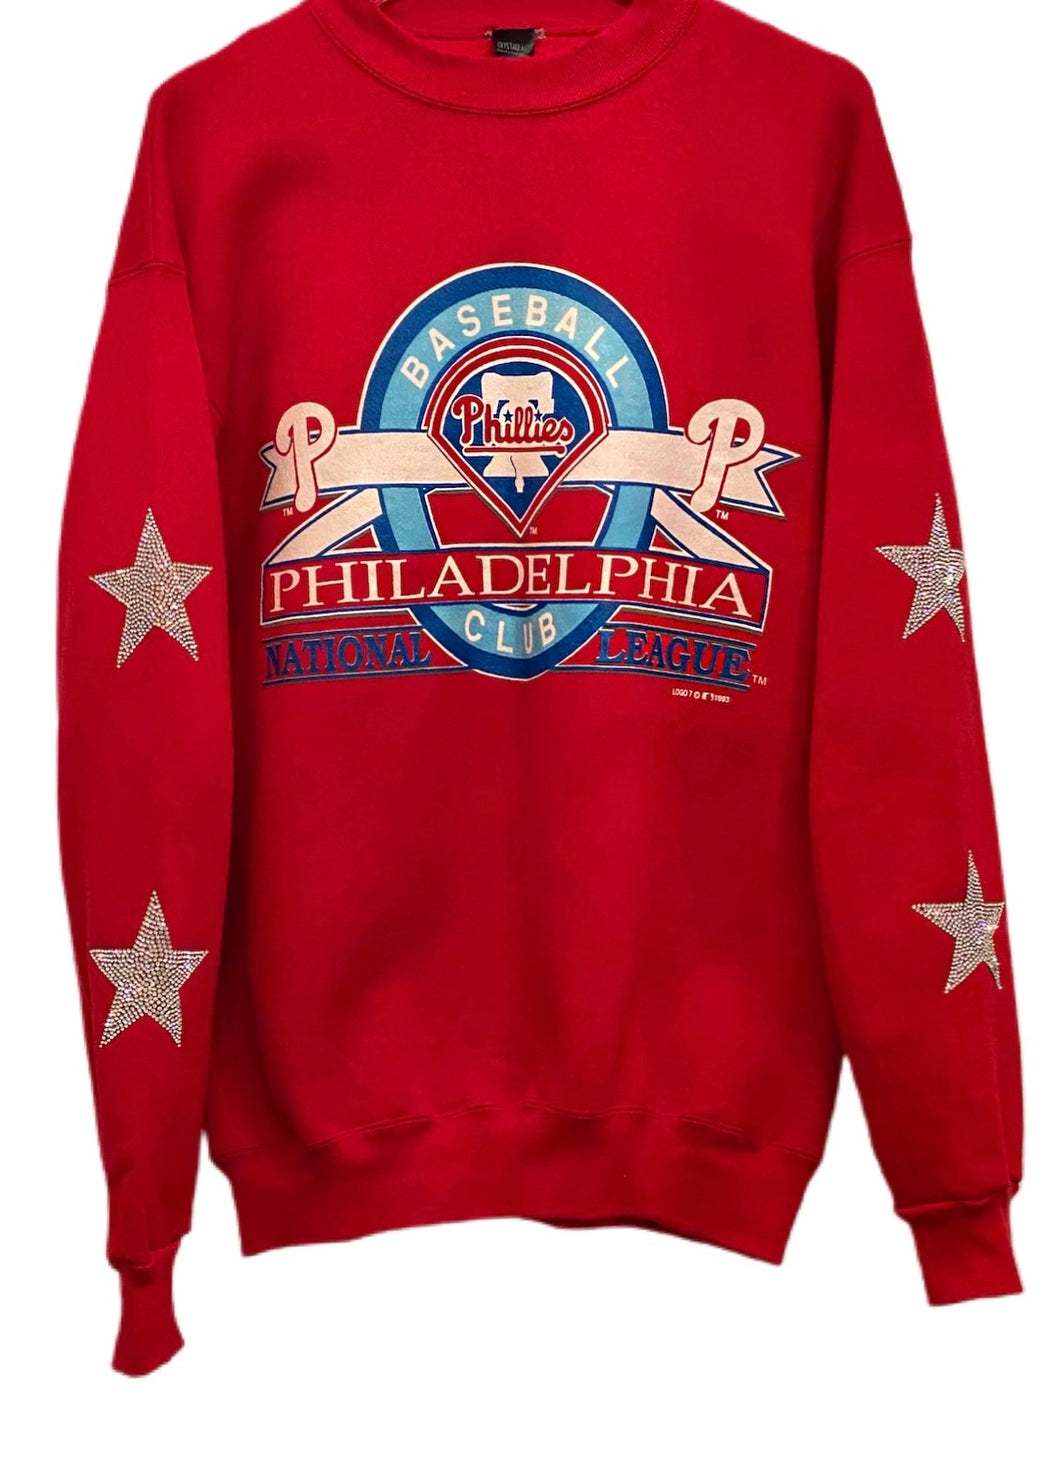 Philadelphia Phillies, MLB One of a KIND Vintage Sweatshirt with Crystal Star Design